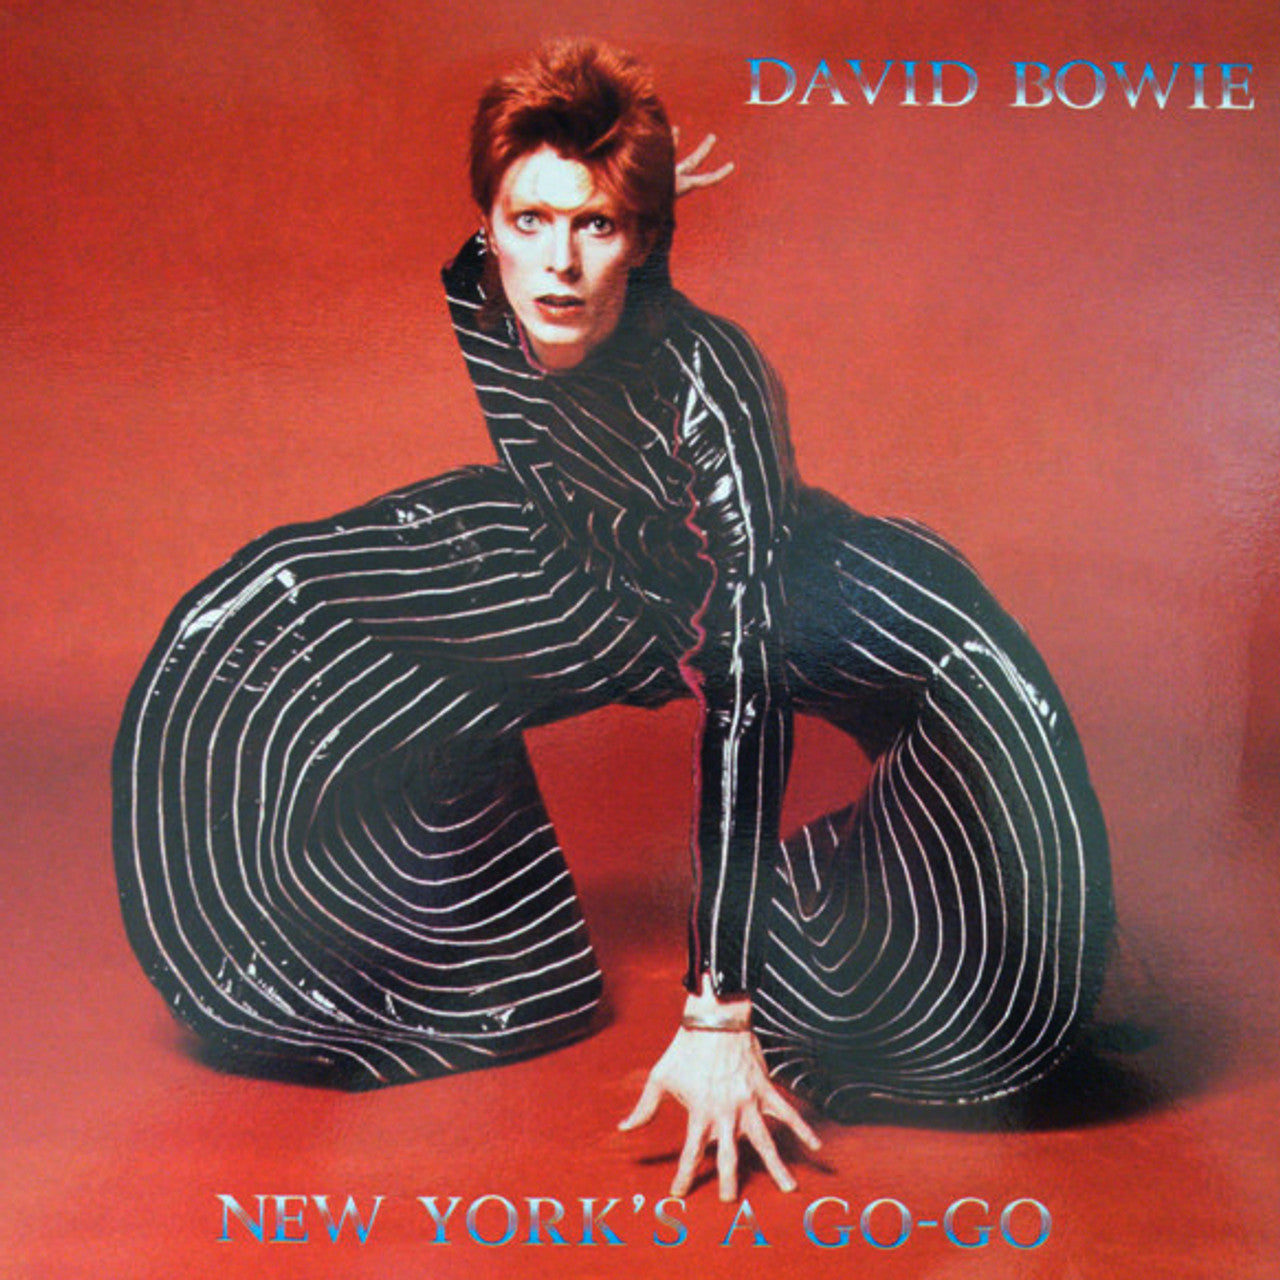 DAVID BOWIE - NEW YORK'S A GO-GO - PURPLE VINYL 2LP - Wah Wah Records